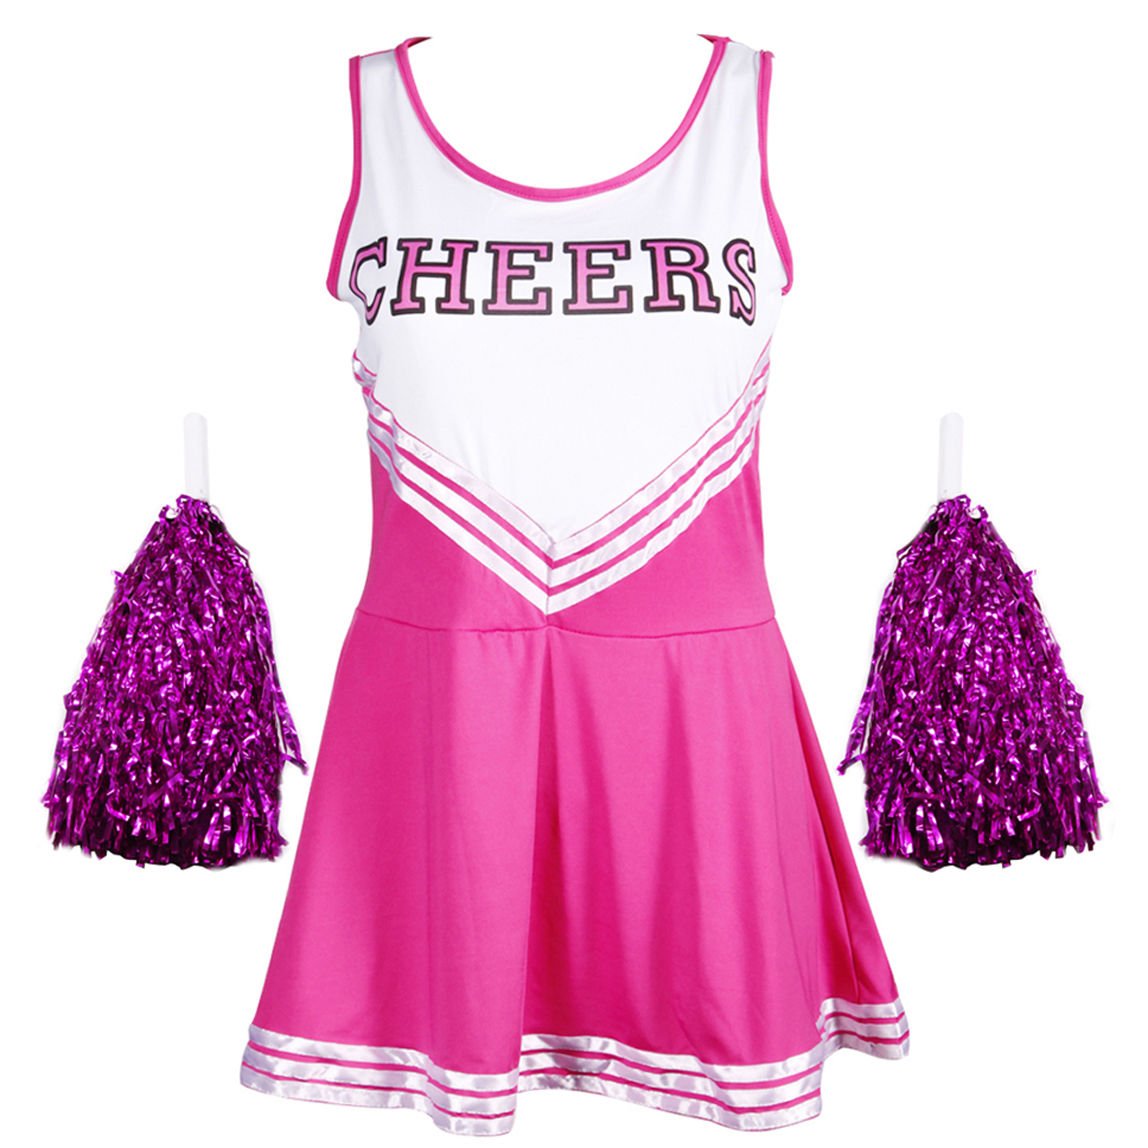 Hot design your own cheerleader uniforms,adult cheerleading uniforms ...